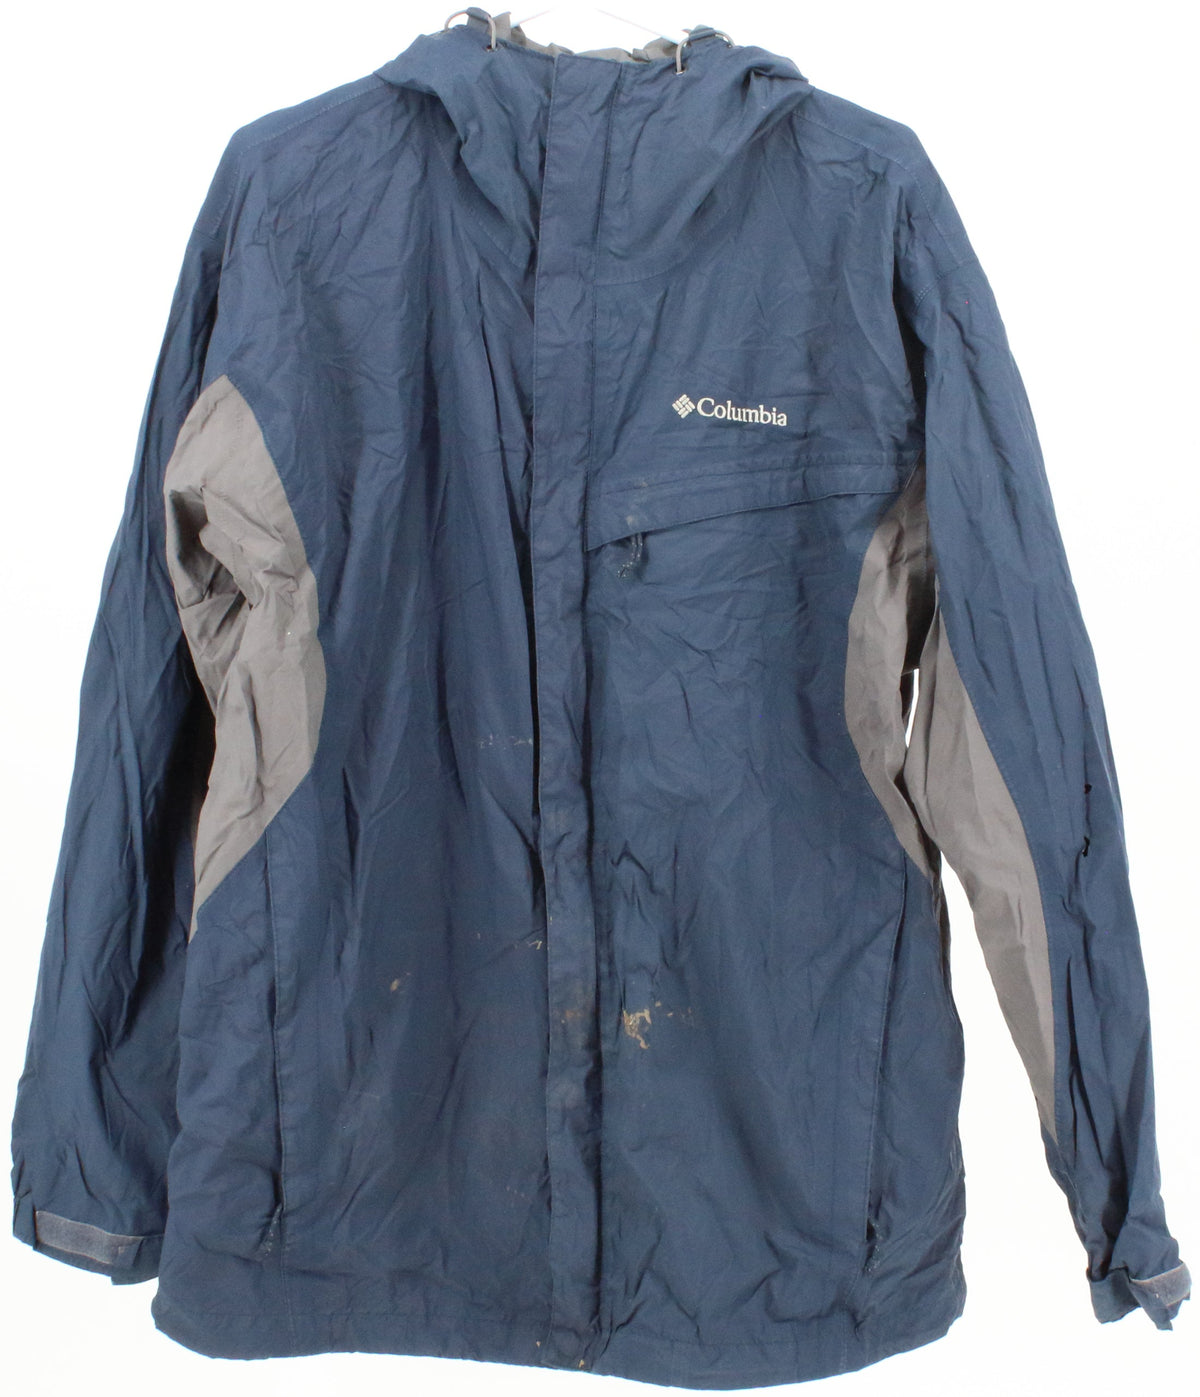 Columbia Men's Omni-Tech Waterproof Breathable Navy Blue Jacket